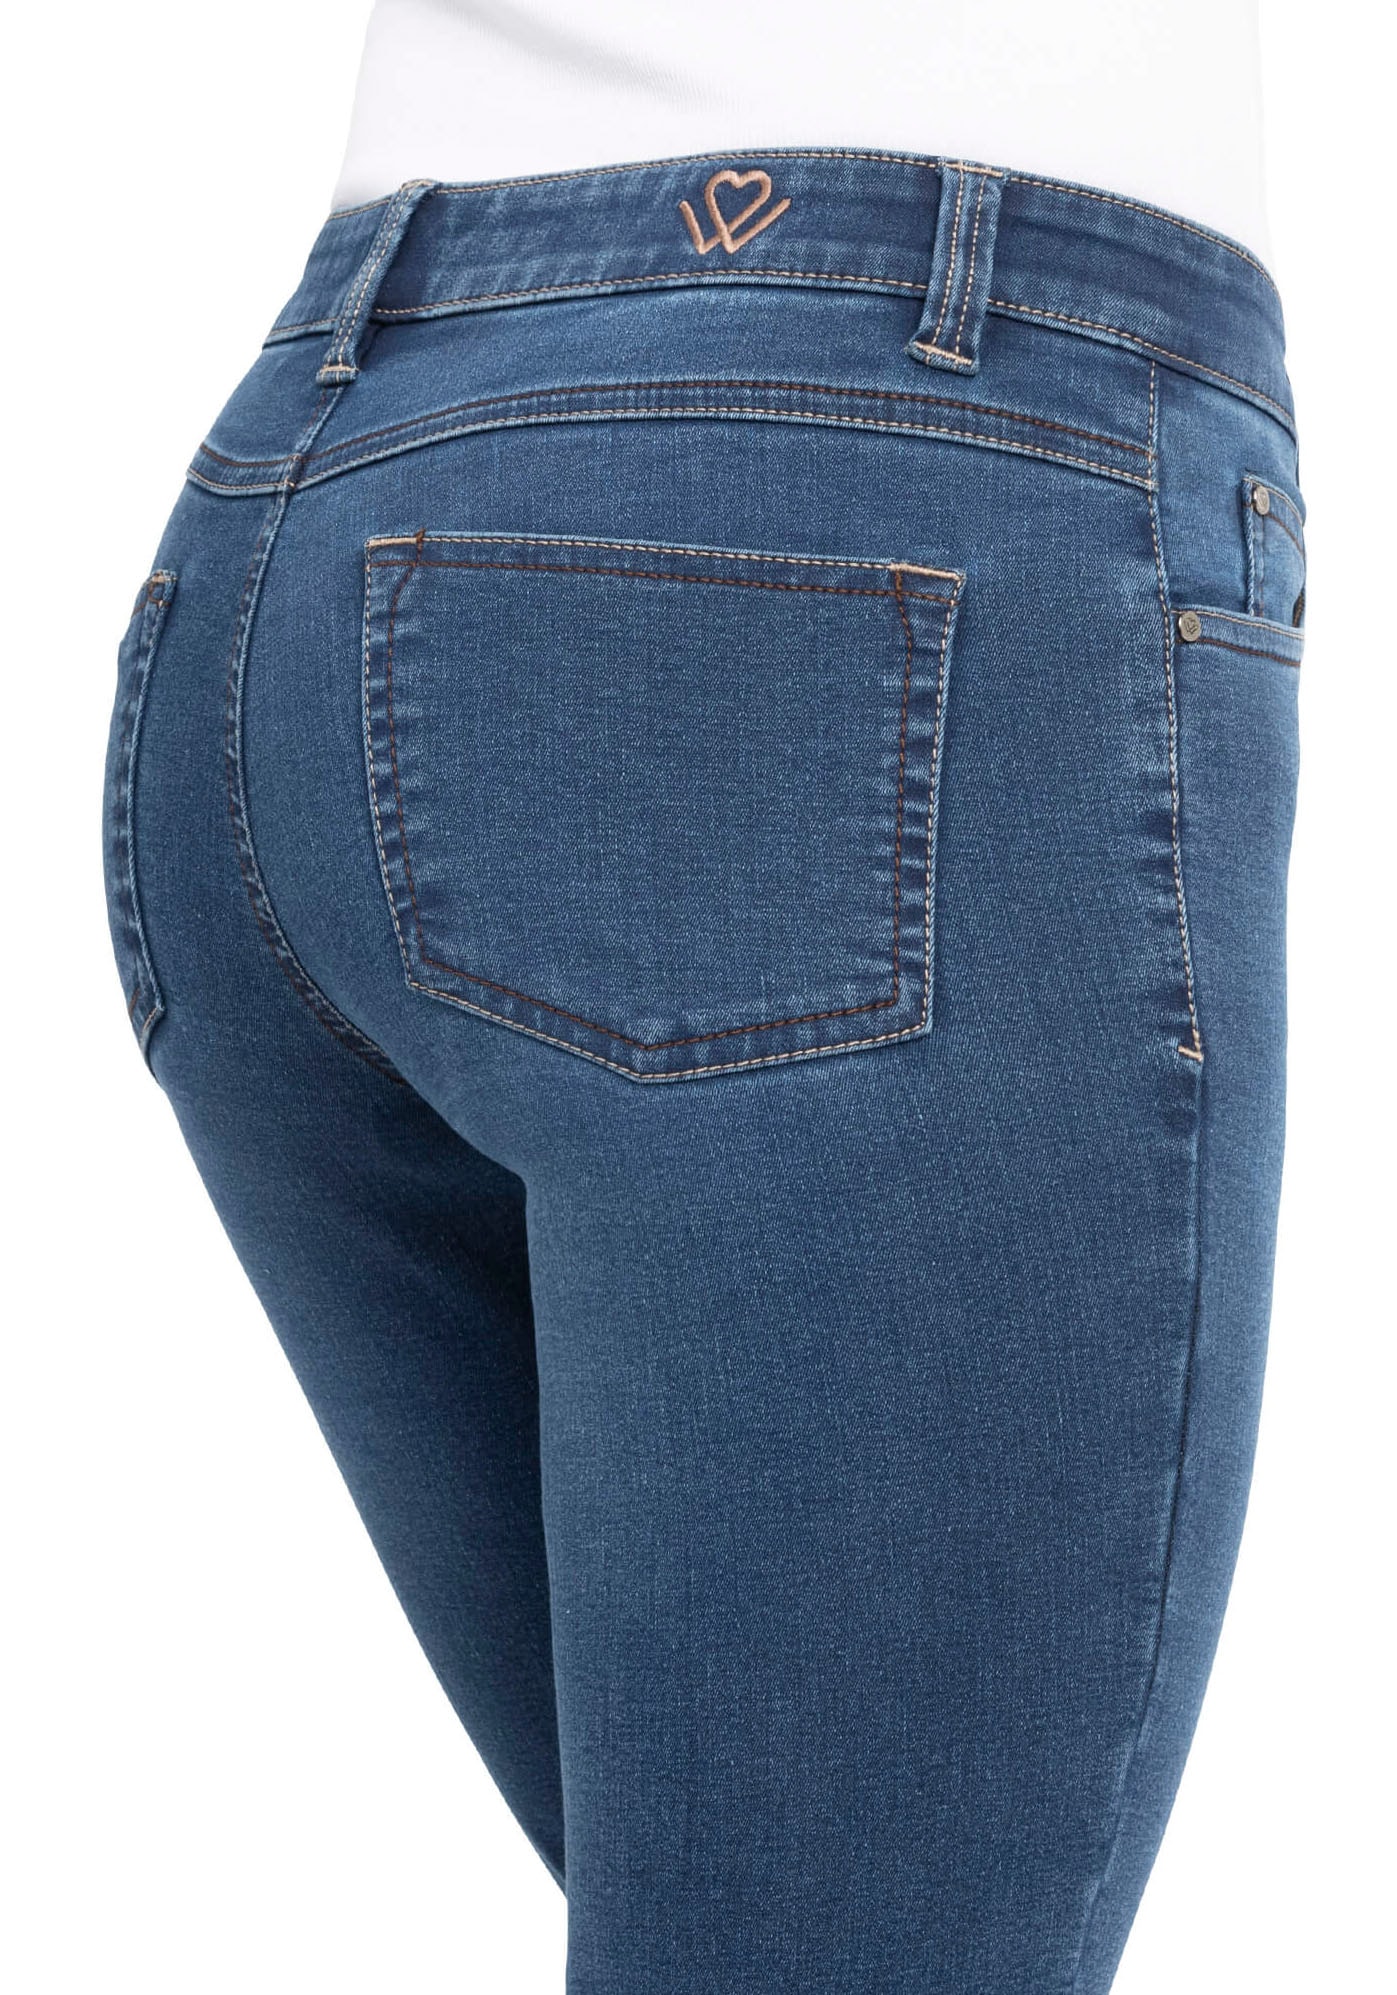 wonderjeans Skinny-fit-Jeans »Skinny-WS76-80«, Schmaler bei Skinny-Fit in Qualität ♕ hochelastischer